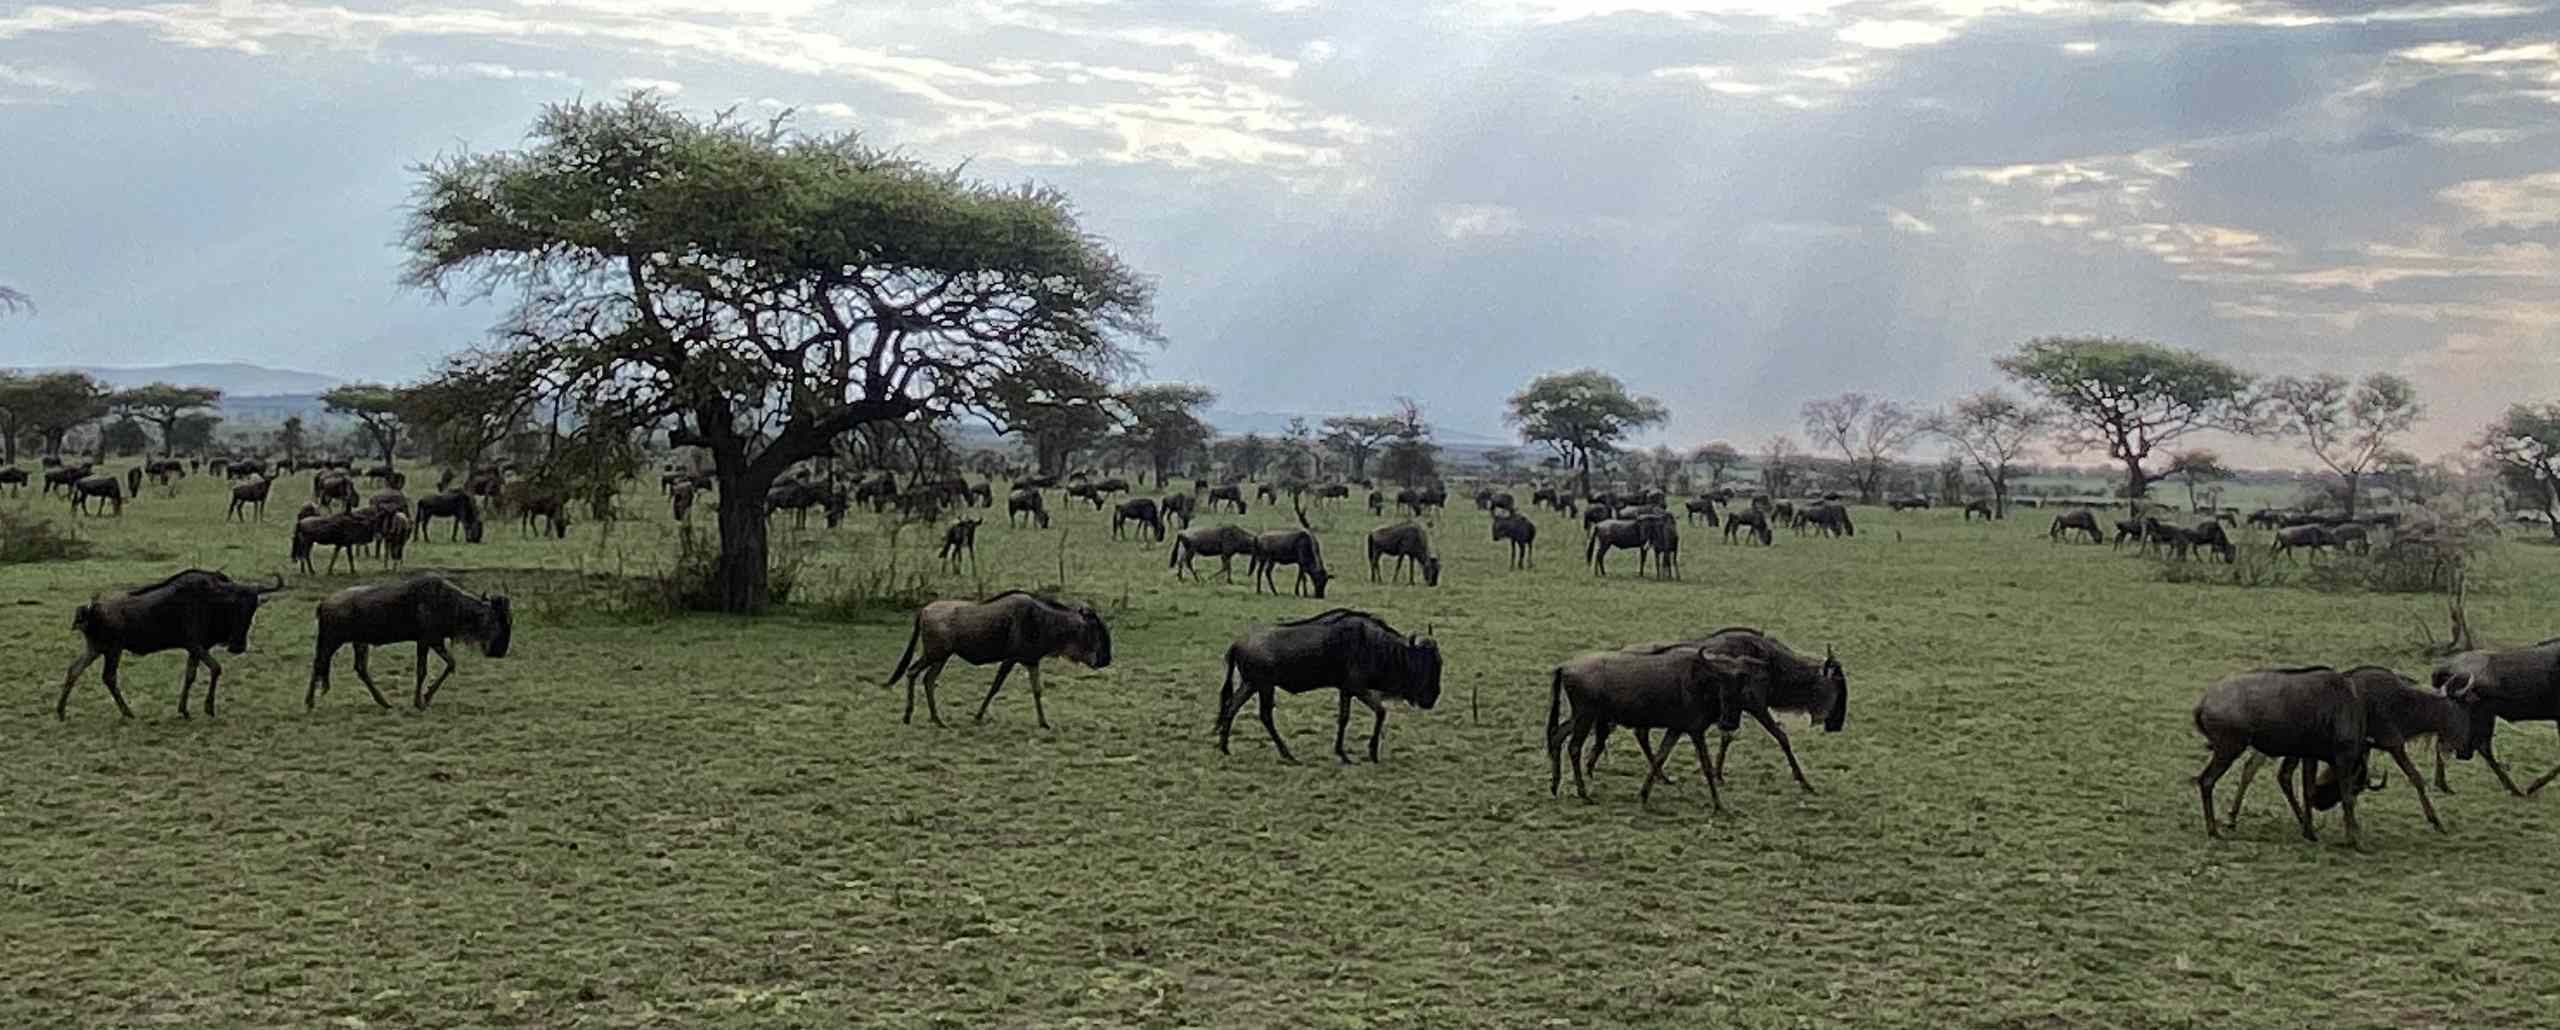 Wildebeest. Luxury safari lodges in North Tanzania